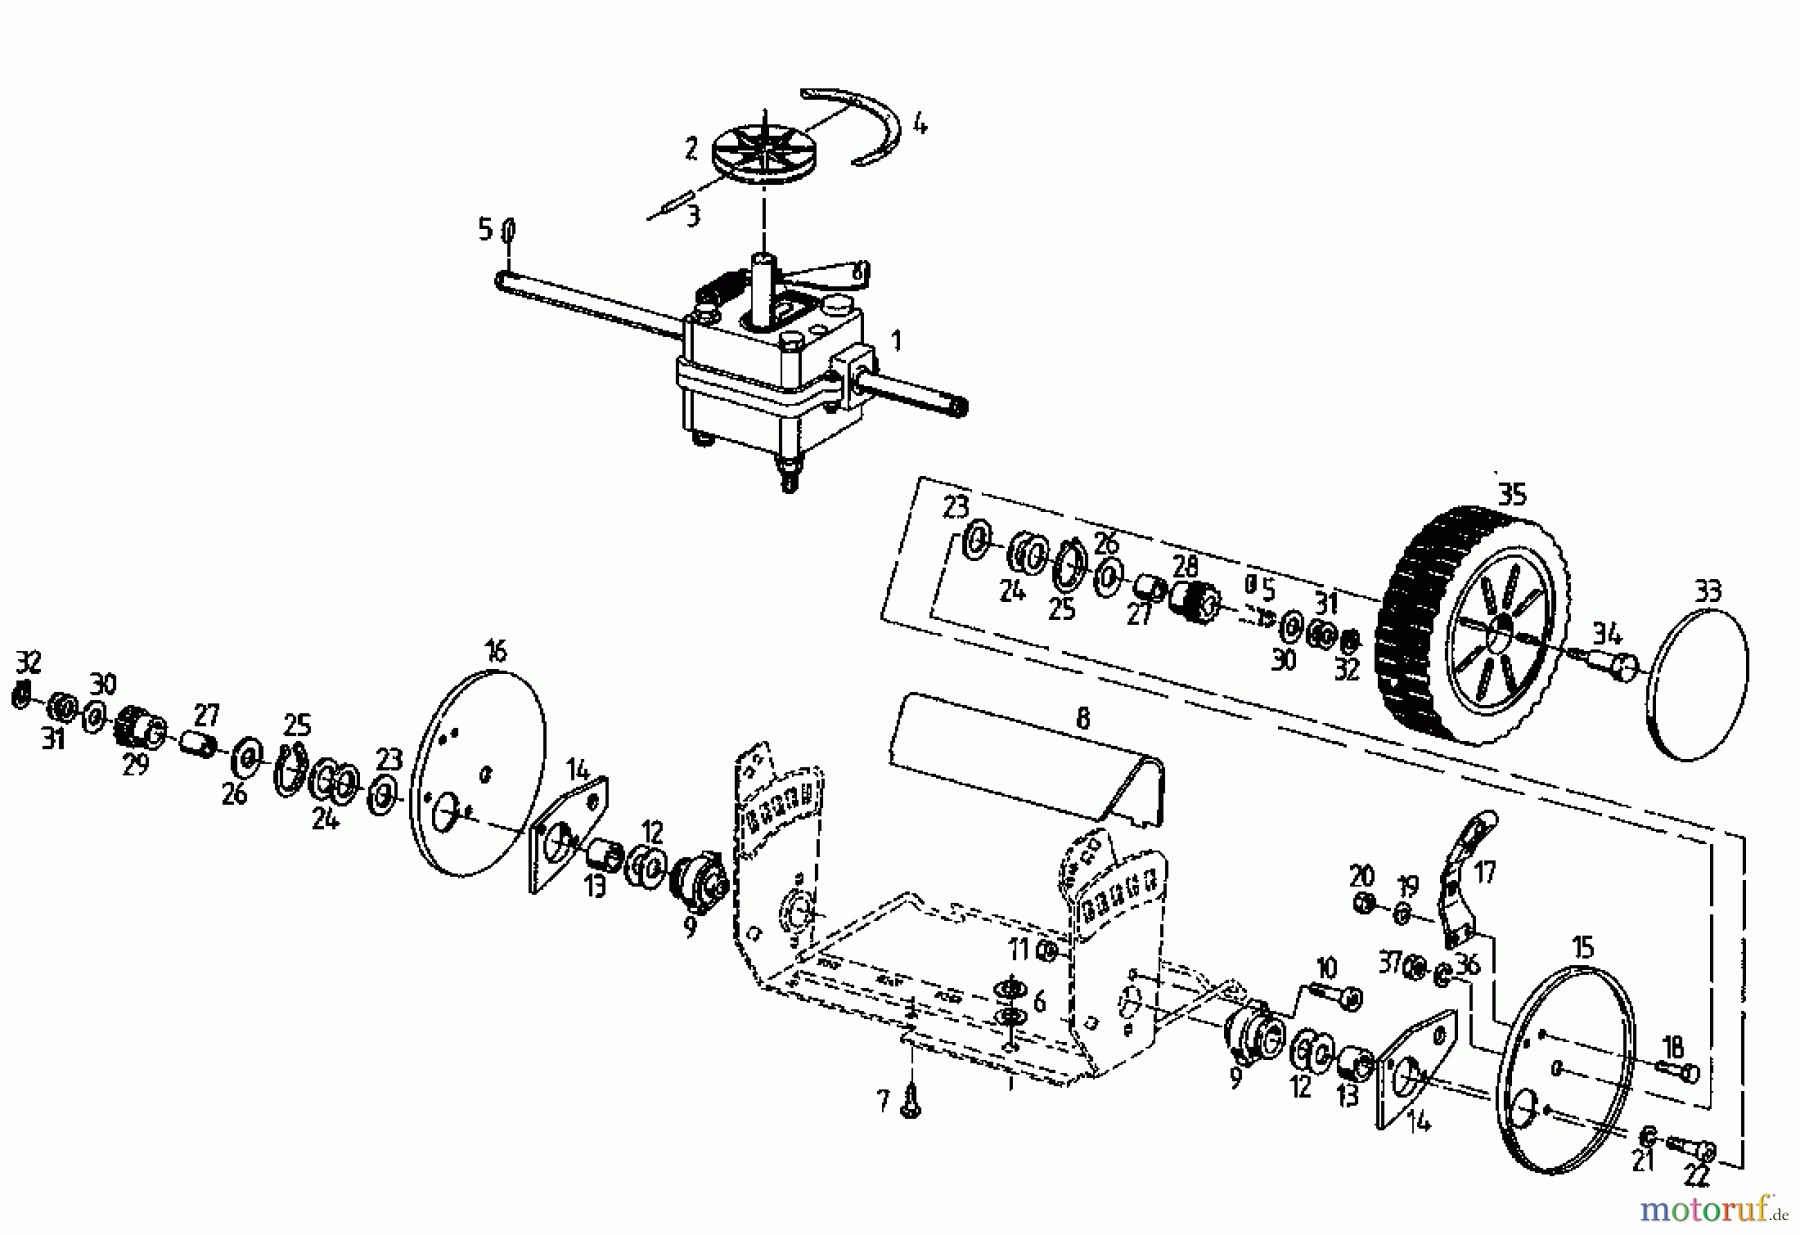  Fair Line Petrol mower self propelled BA 450 04025.05  (1995) Gearbox, Wheels, Cutting hight adjustment